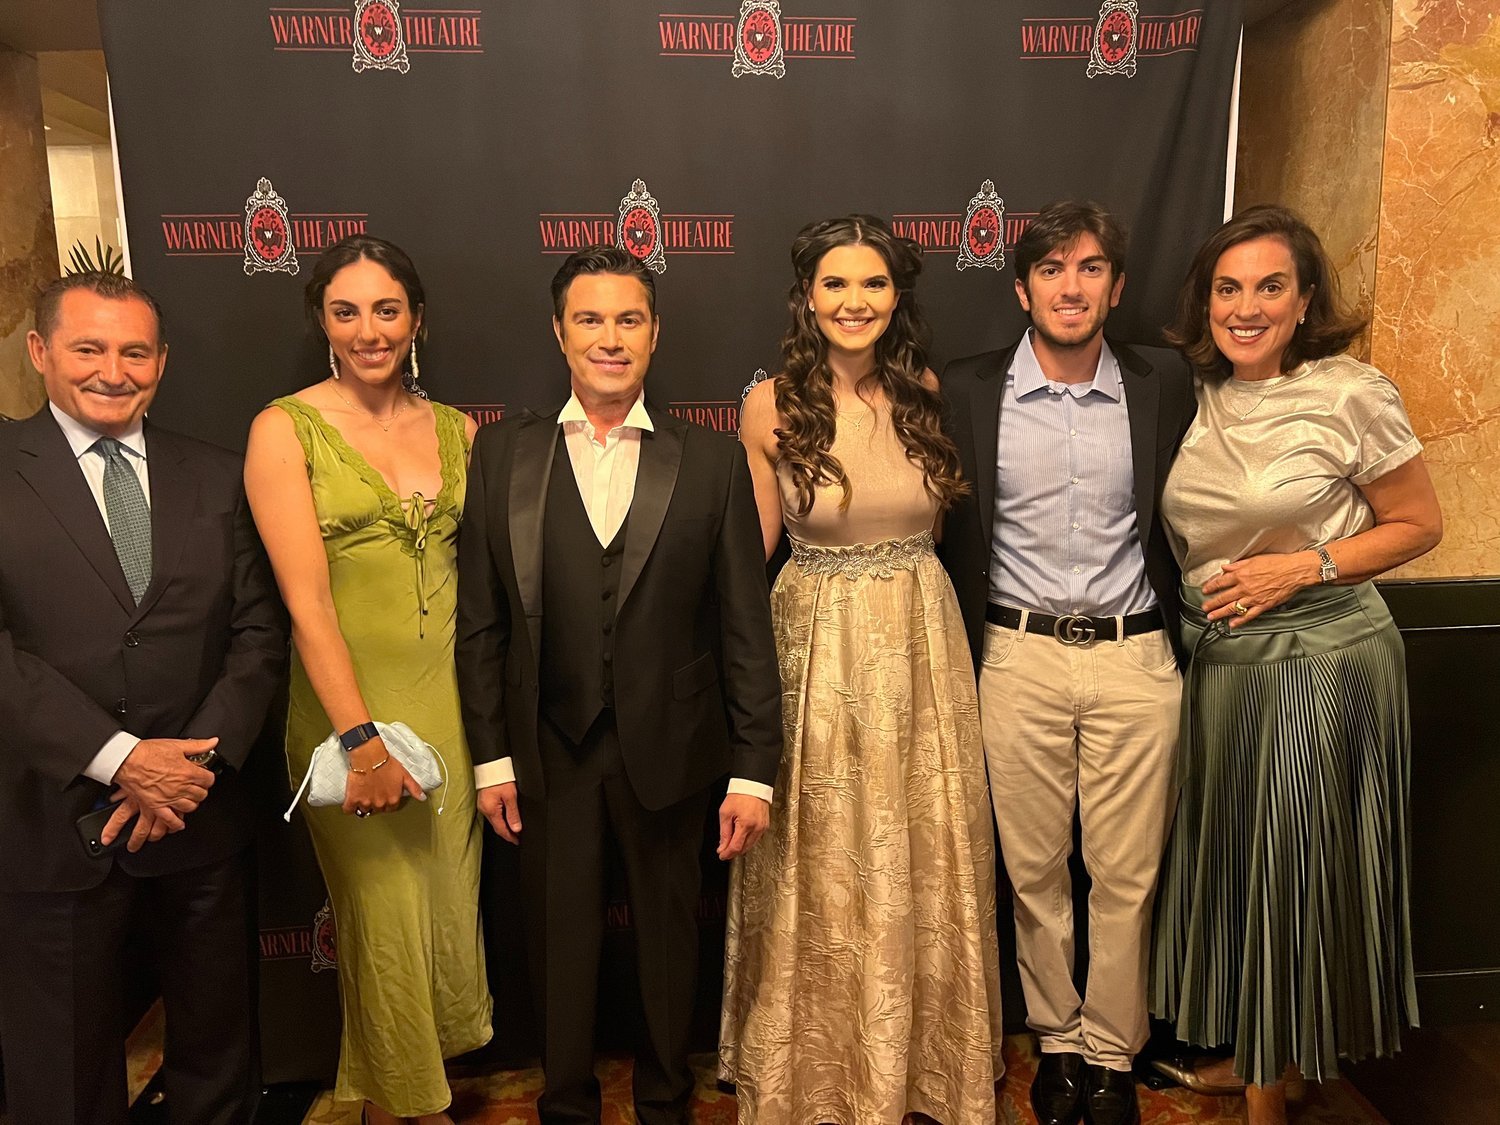  The Sakellaris Family poses with Mario Frangoulis and Theresa Carlomagno. 